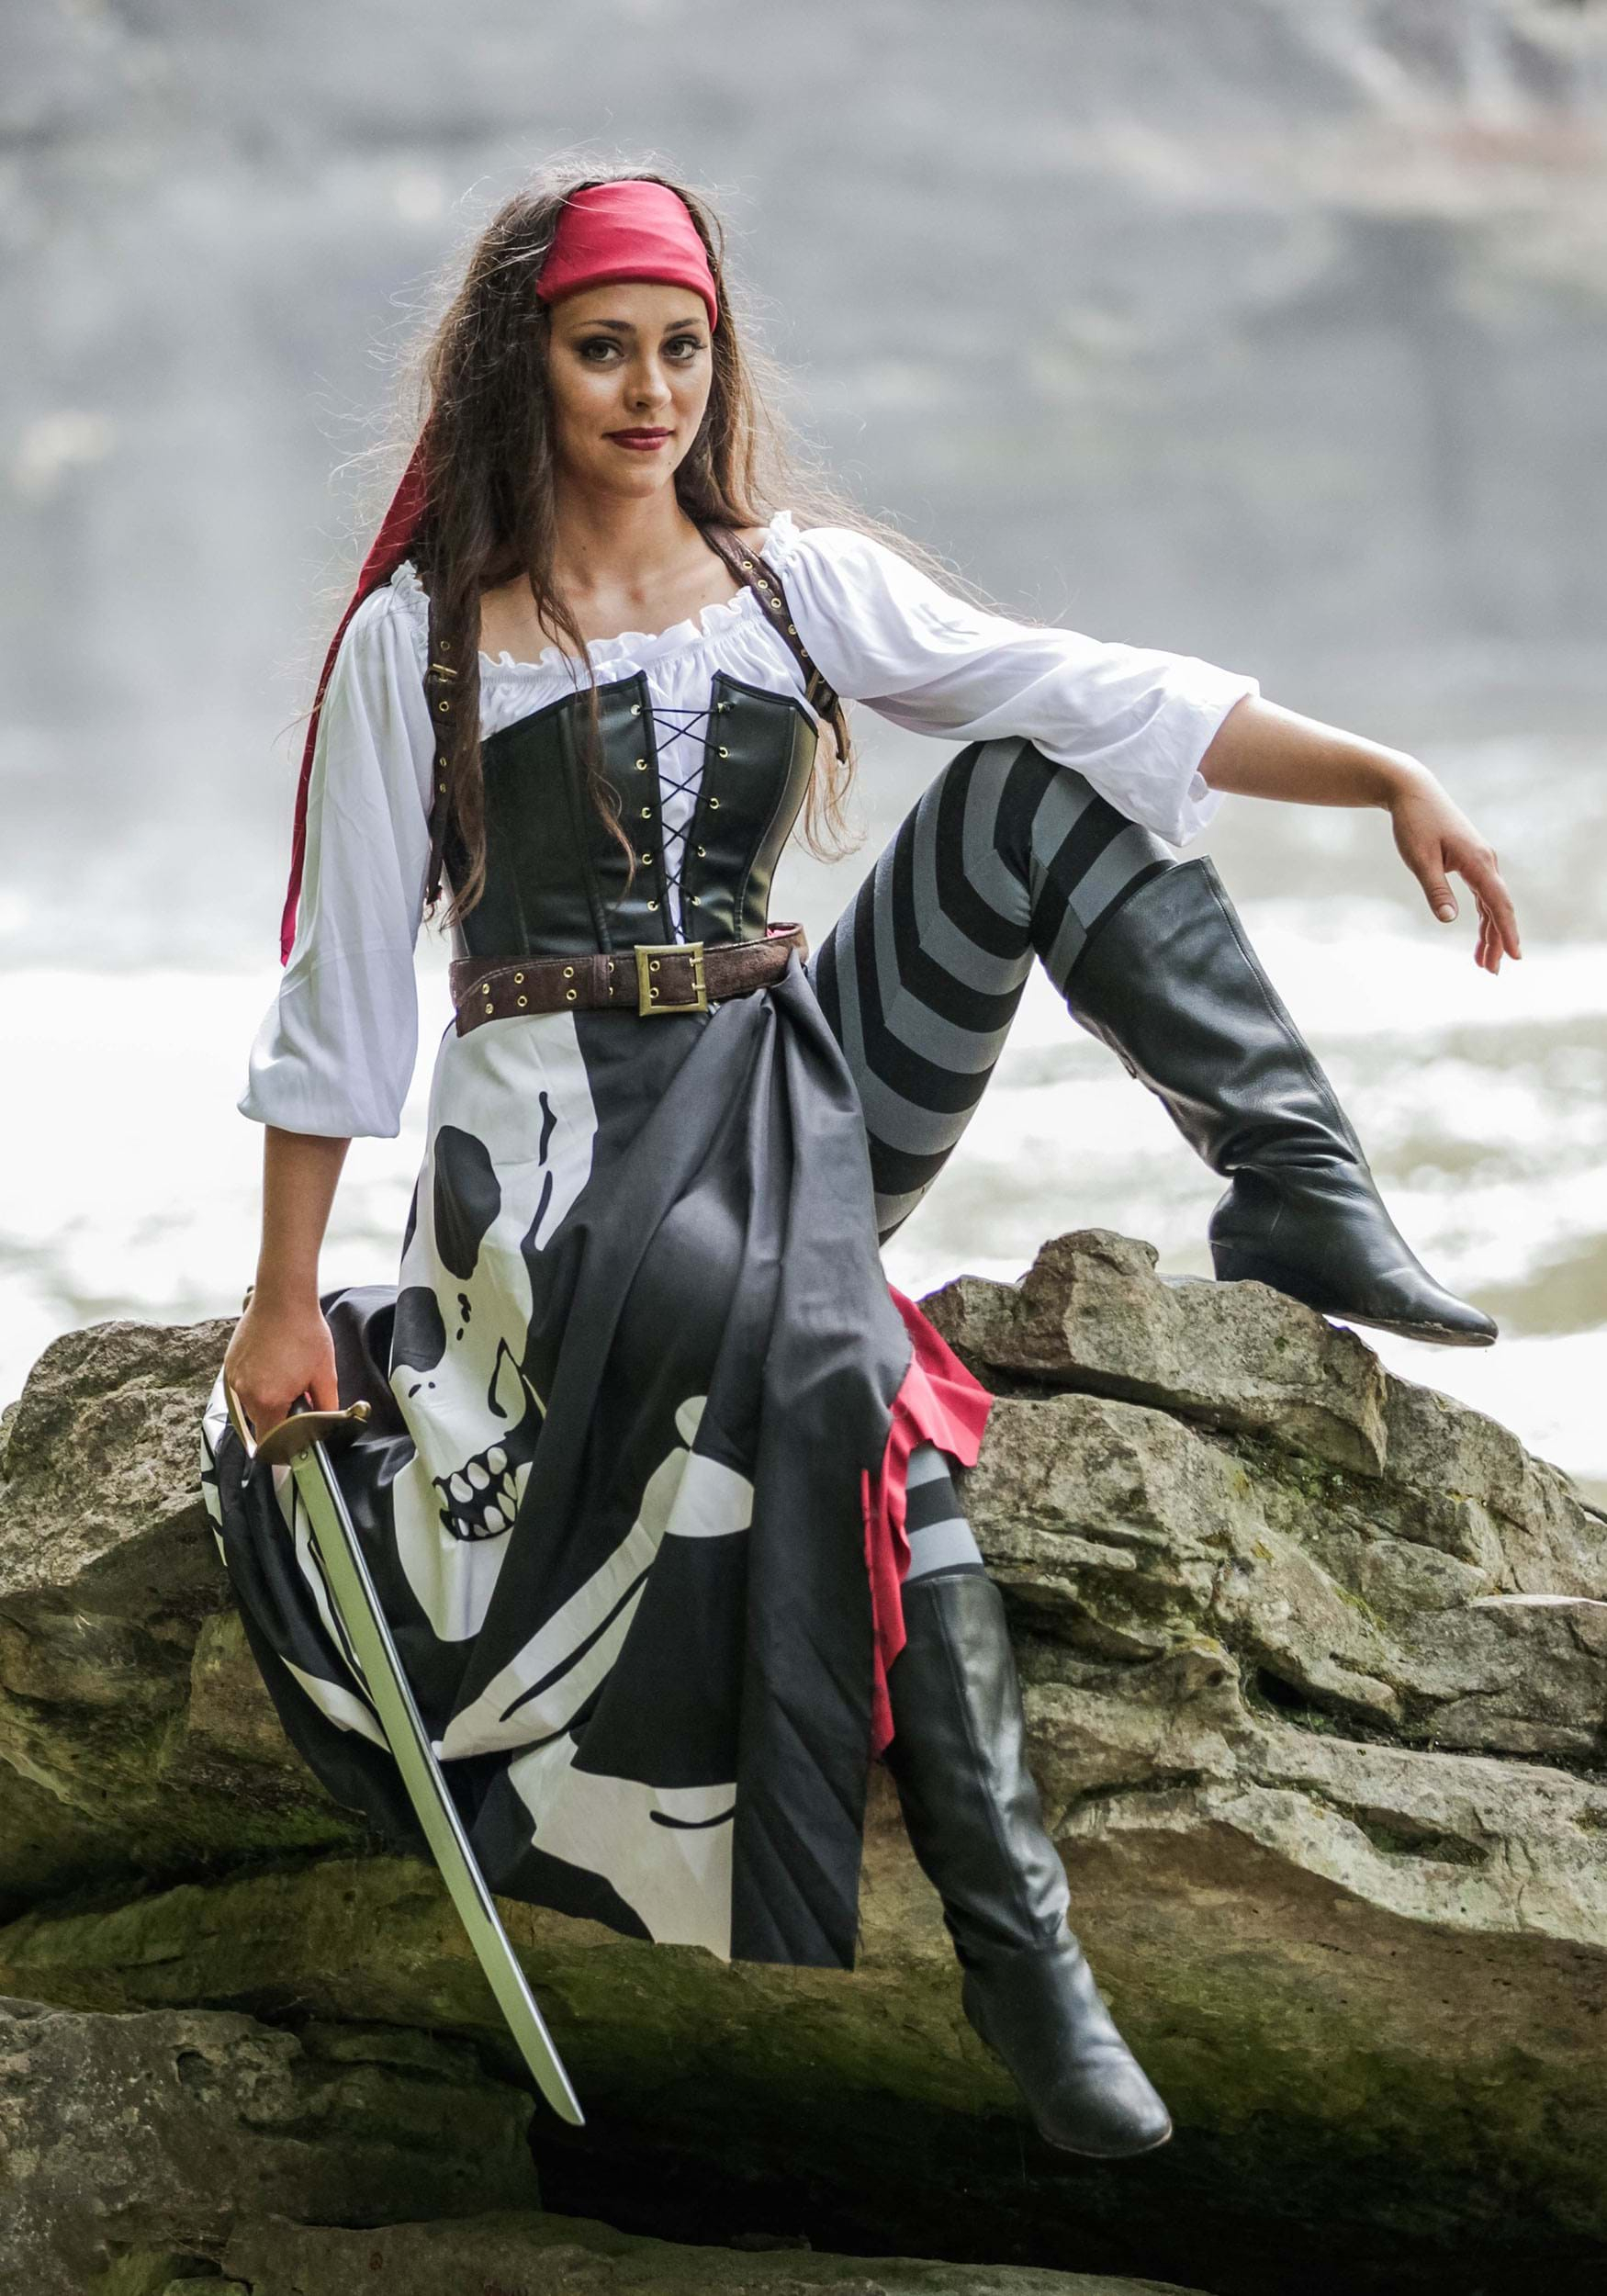 Plus Size Women S Skeleton Flag Rogue Pirate Costume Size 4429